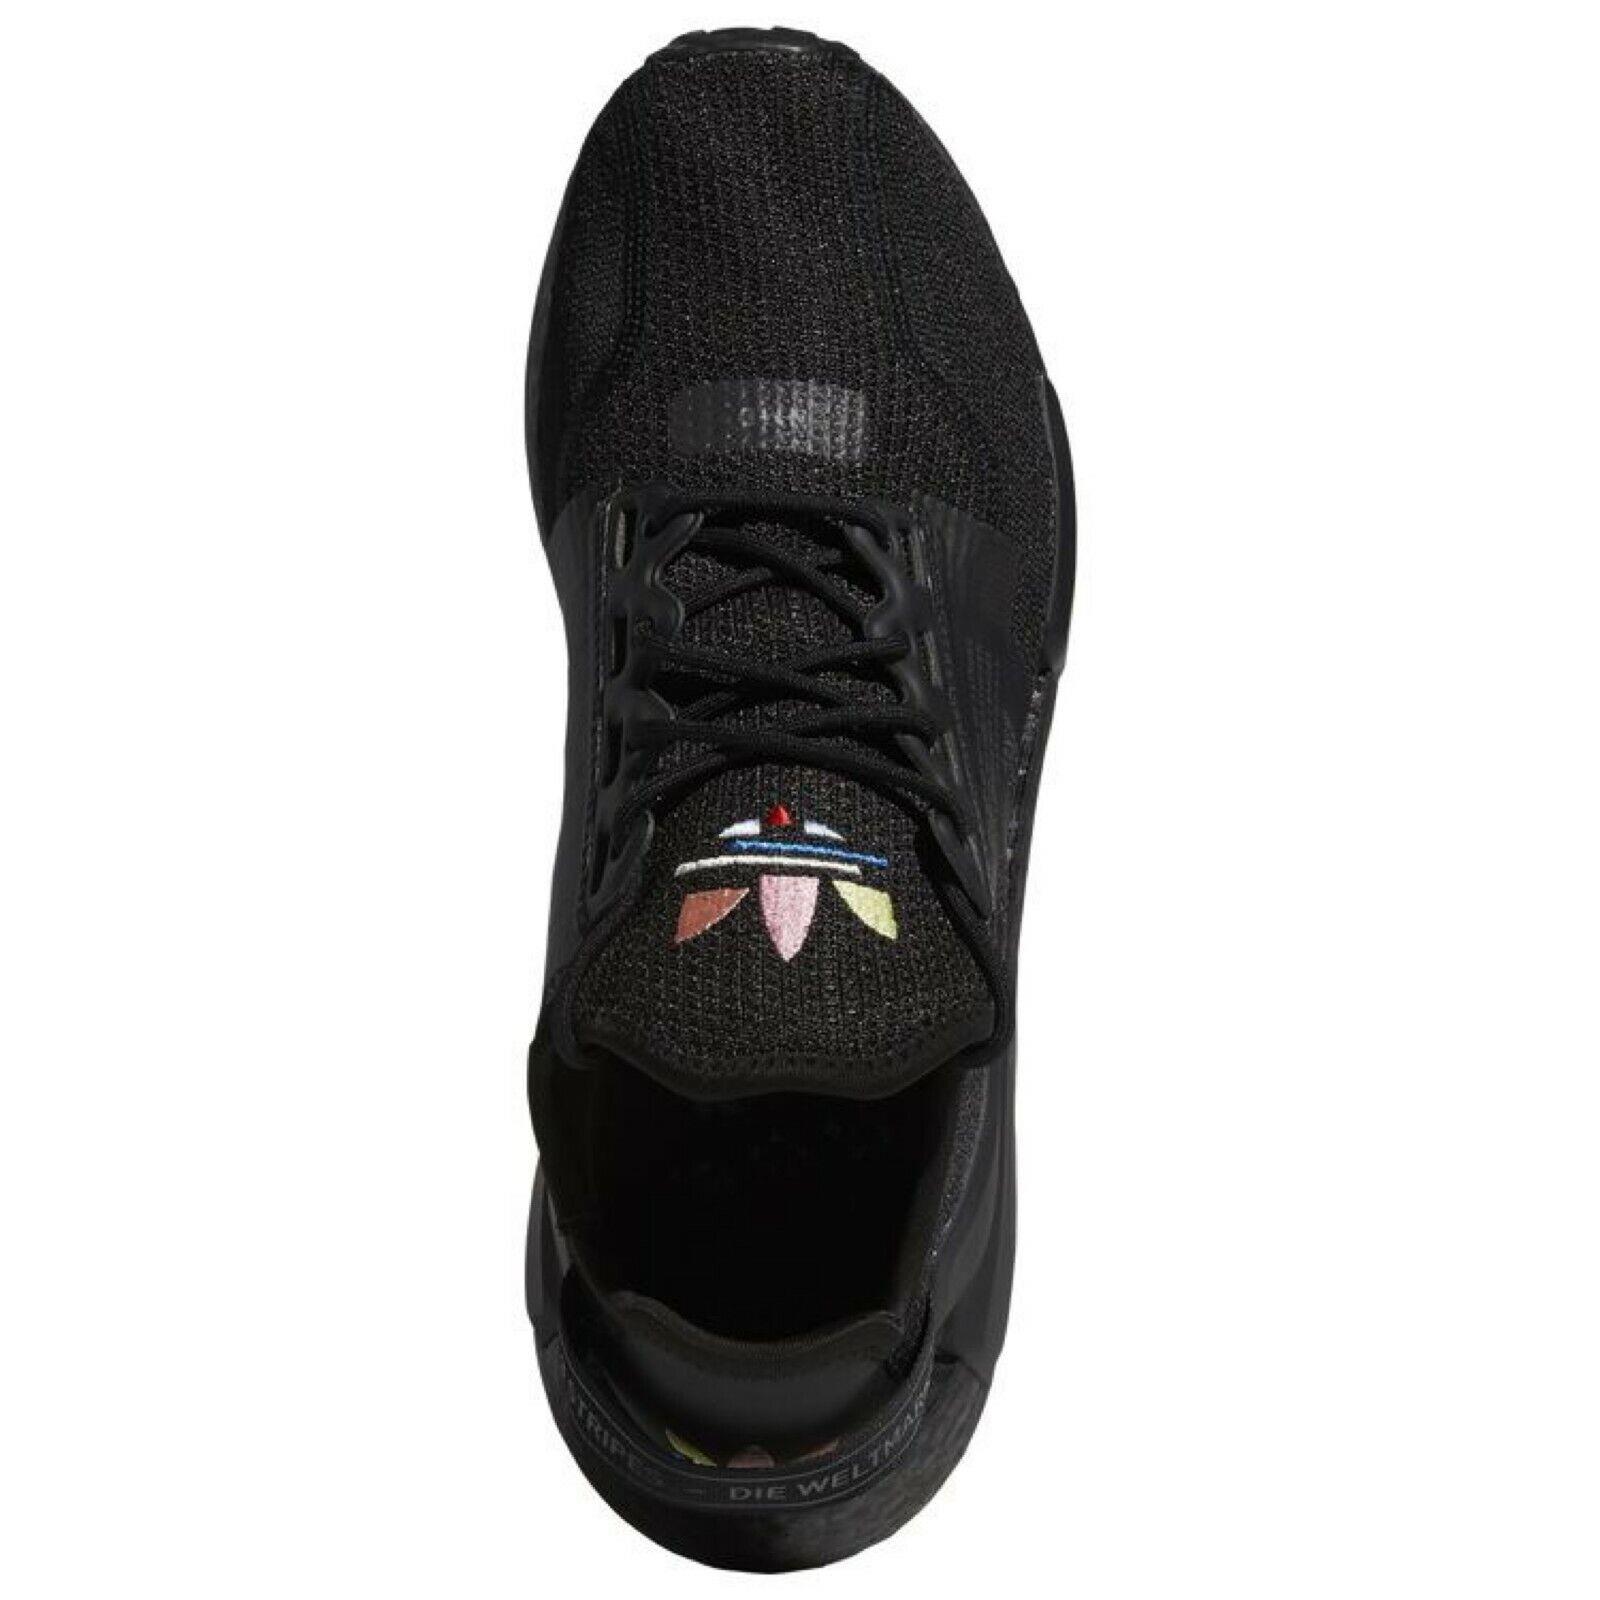 Adidas shoes Originals - Black , Black/Multi Manufacturer 8